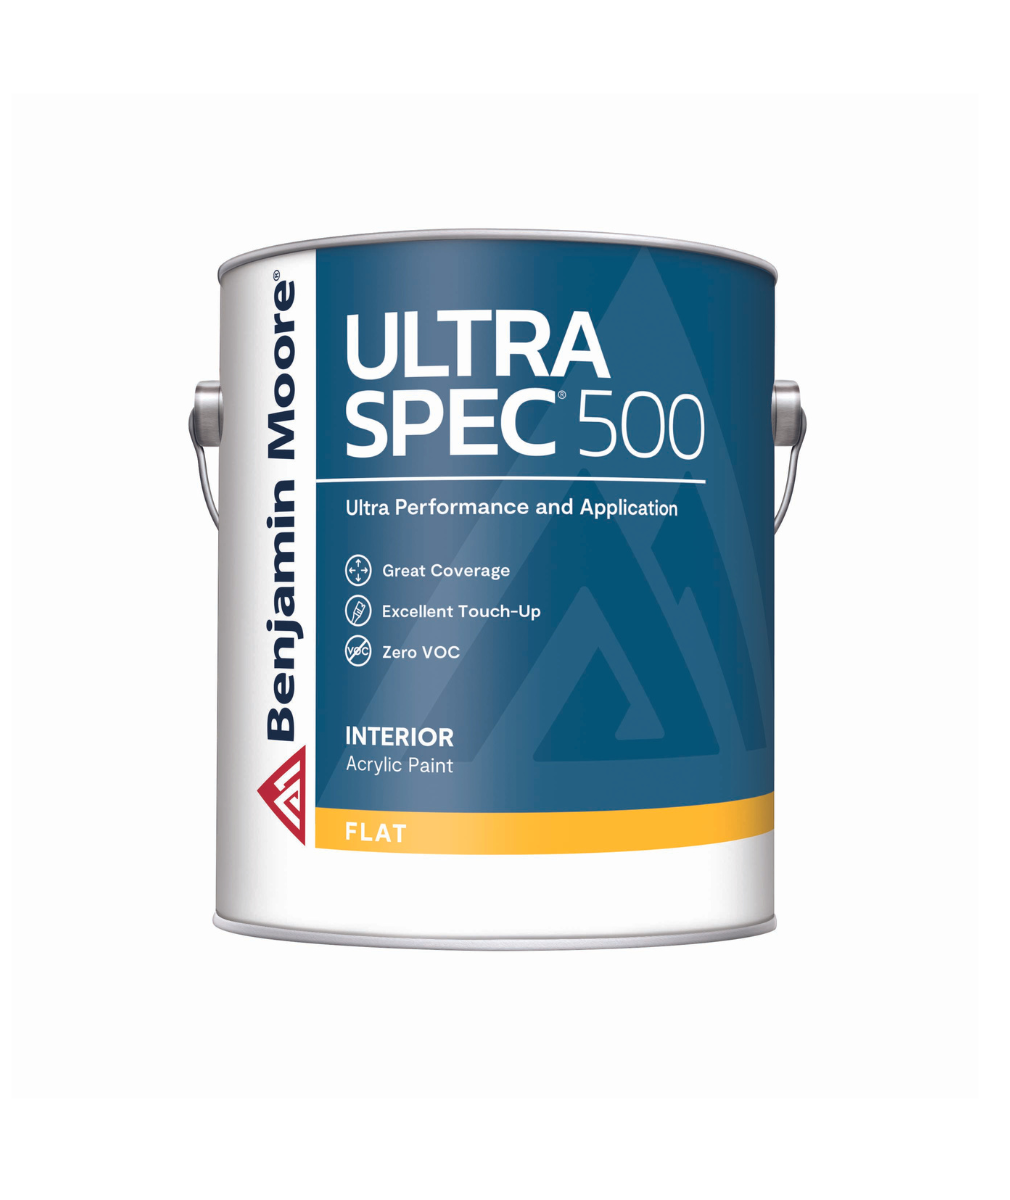 Benjamin Moore Ultra Spec 500 flat Interior Paint available at JC Licht.